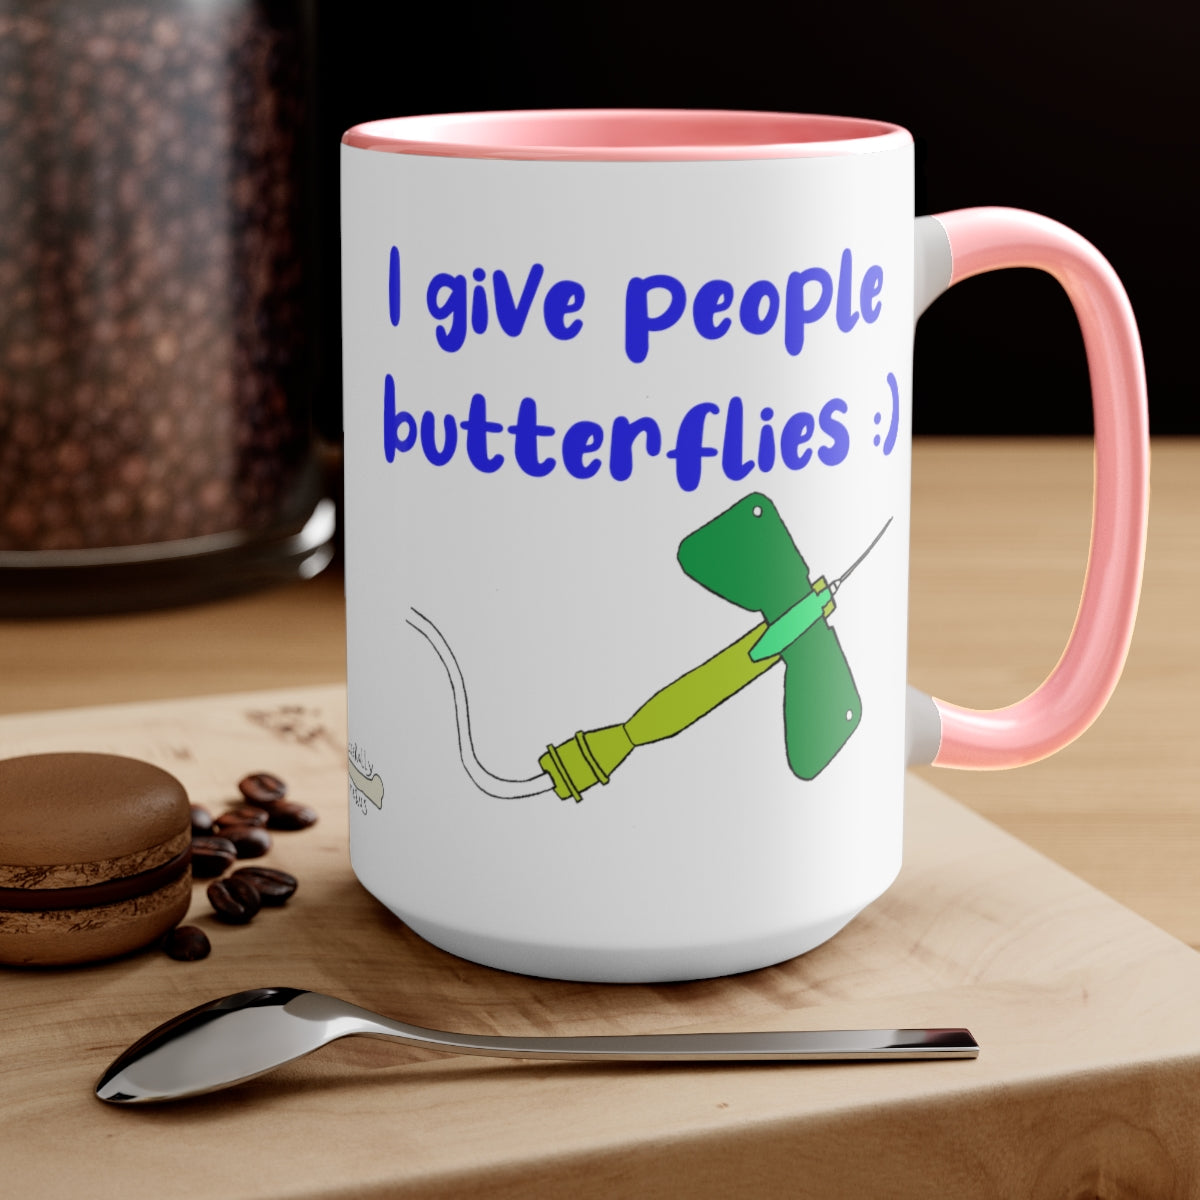 I Give People Butterflies Two-Tone Coffee Mugs, 15oz